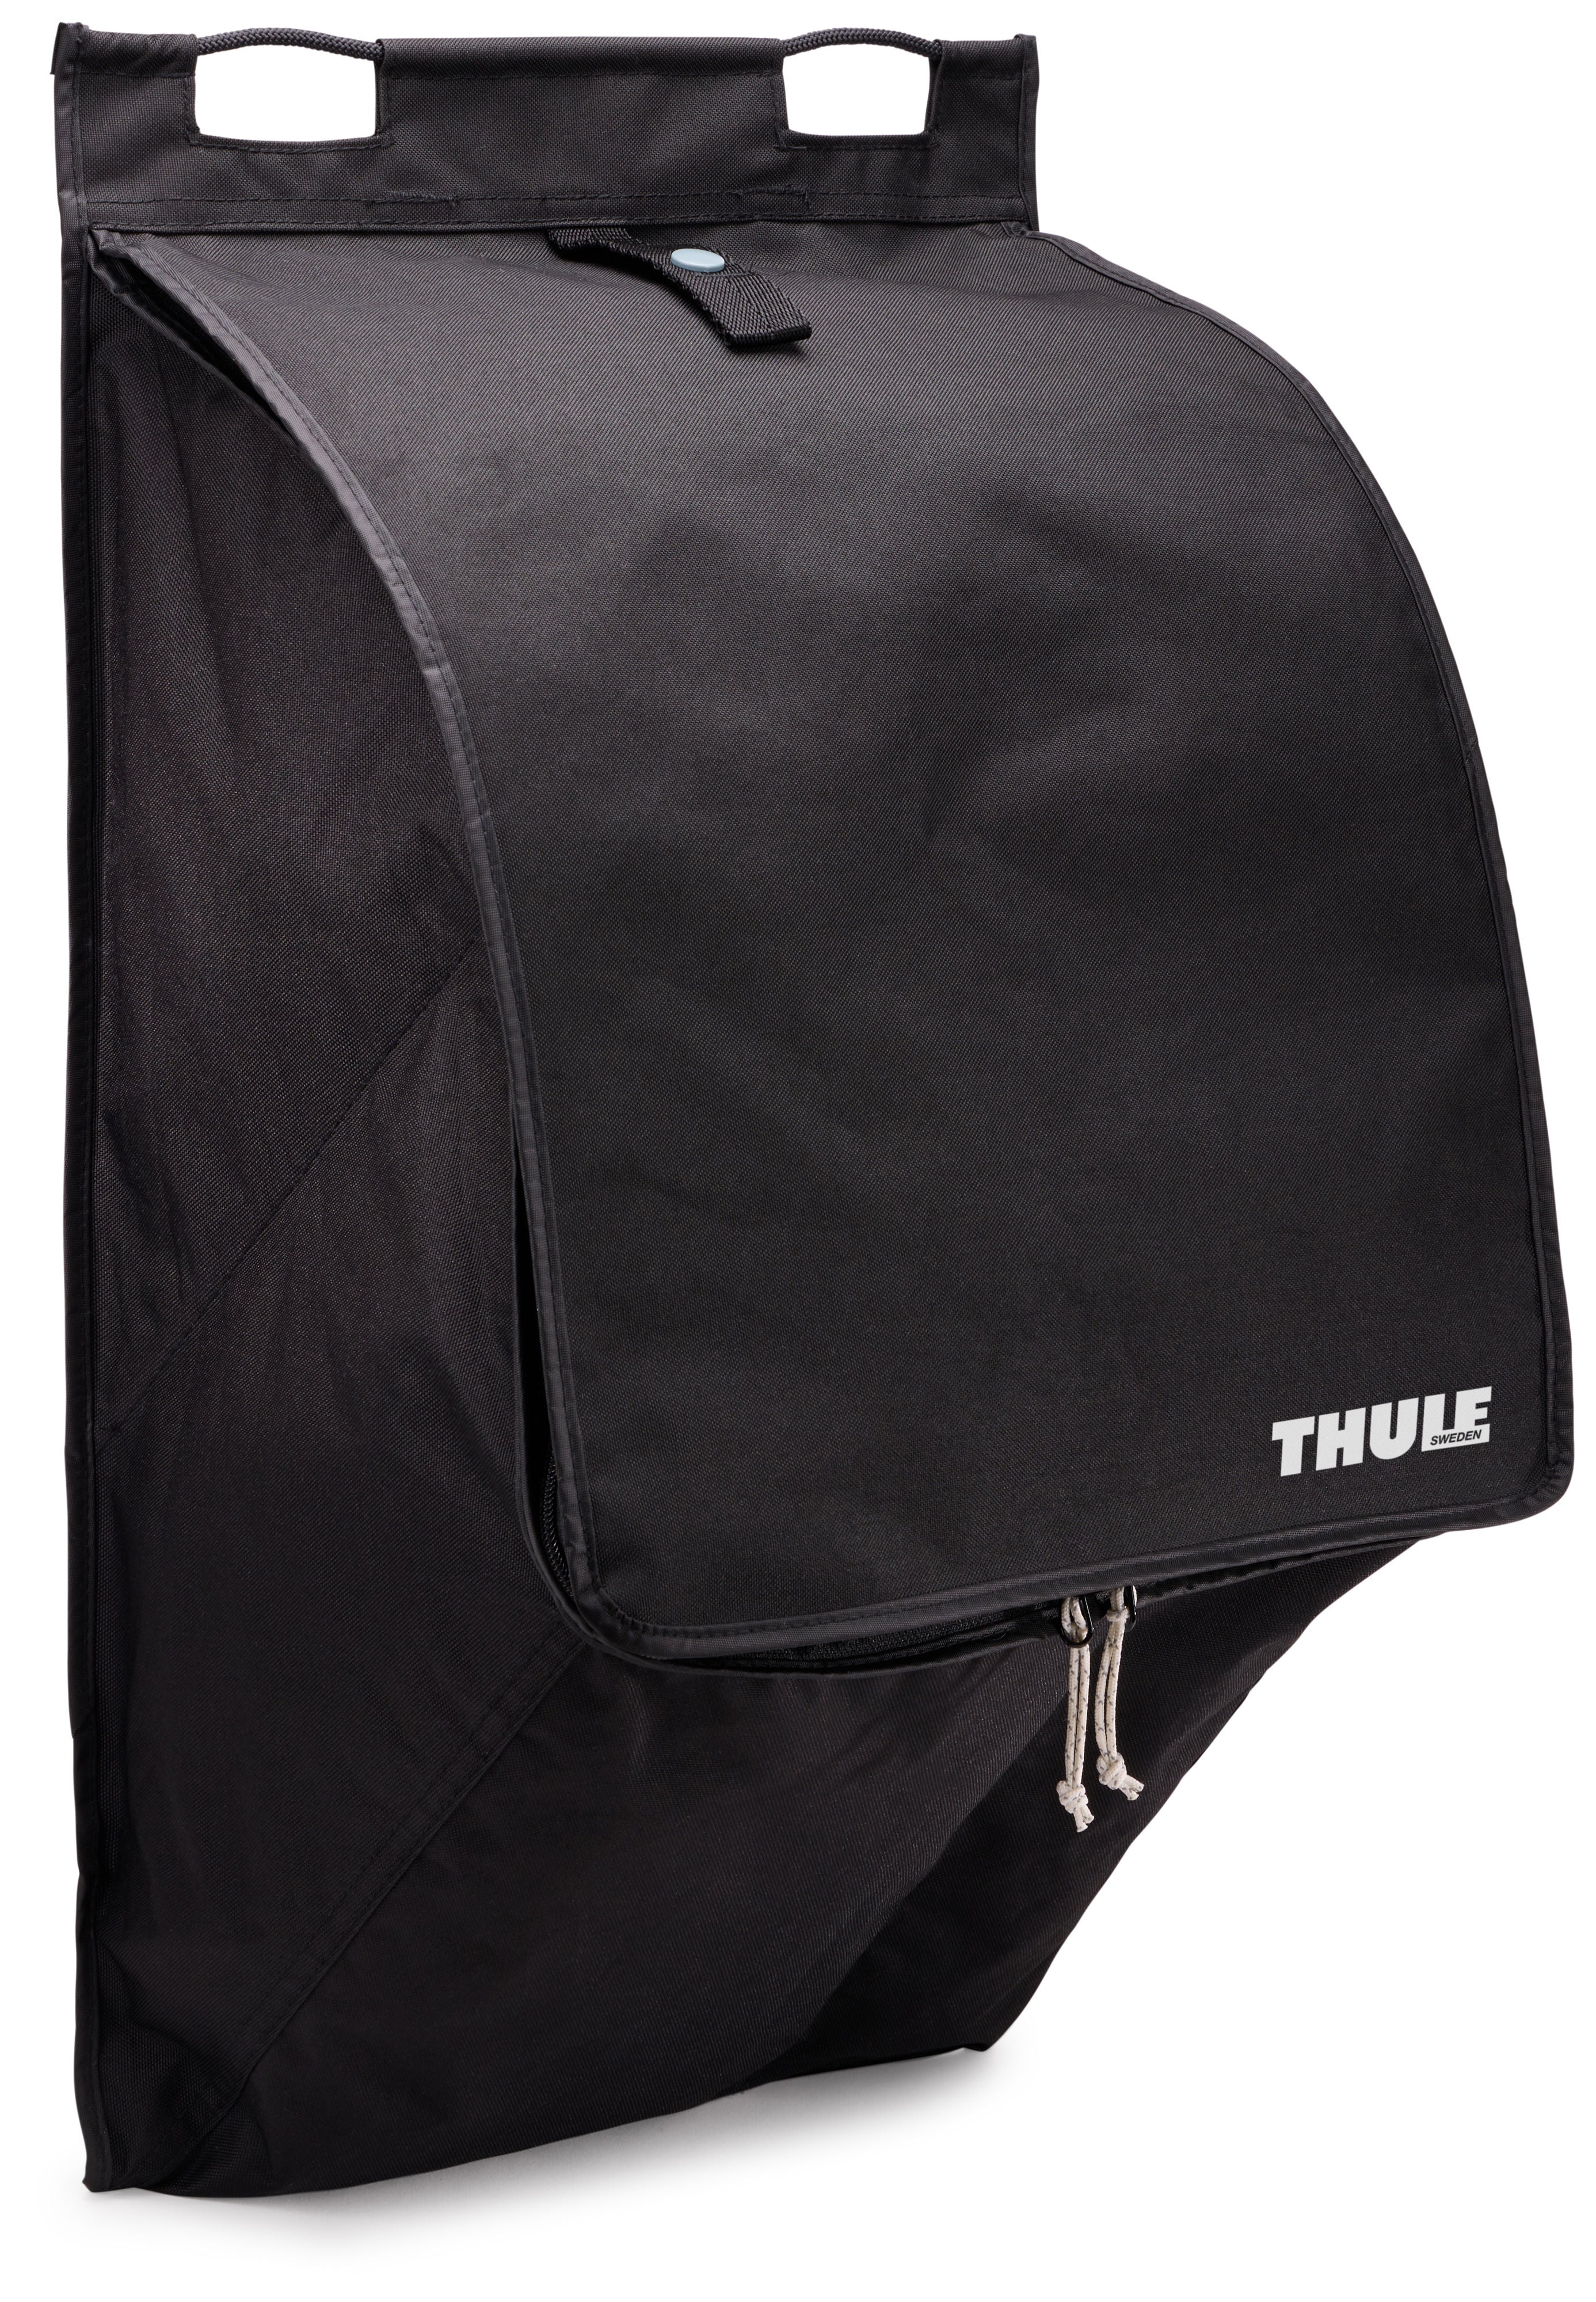 Thule 901850 - Black Rooftop Tent Organizer